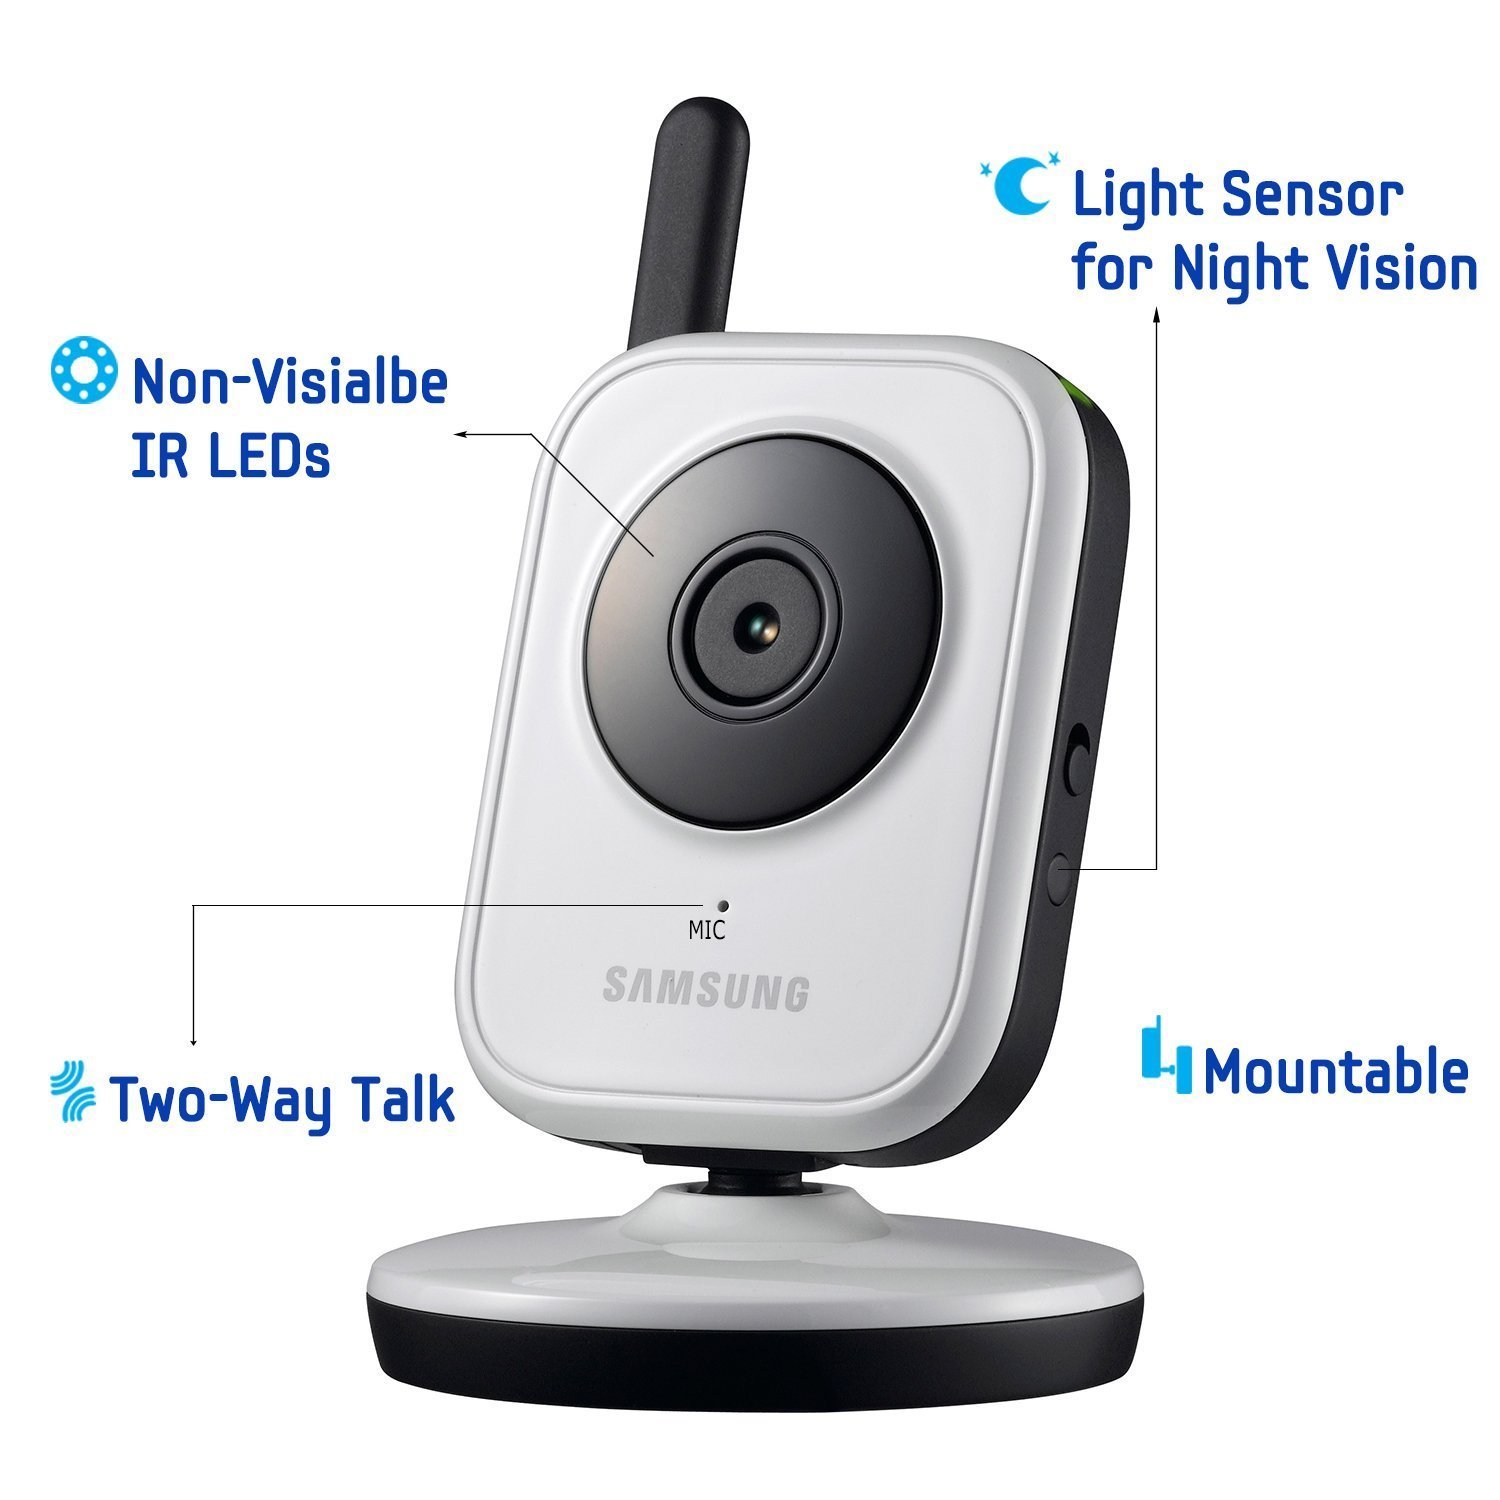 samsung-sew-3036wn-wireless-video-baby-monitor-ir-night-vision_2.jpg  by tnte